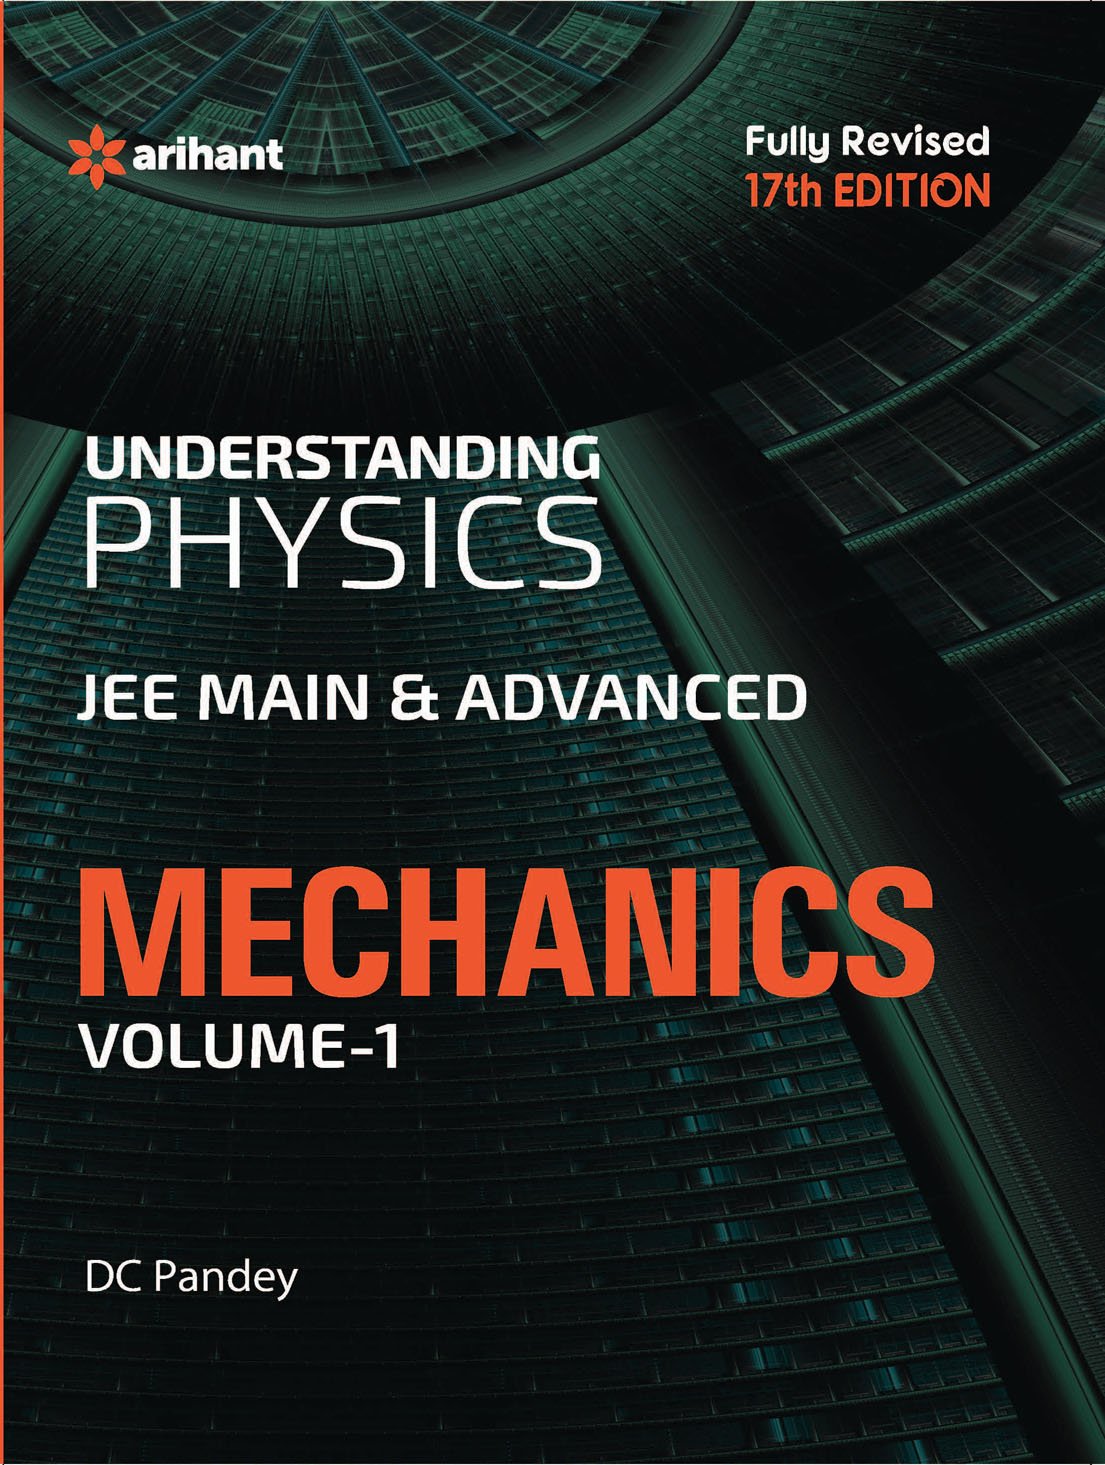 Dc pandey physics pdf books